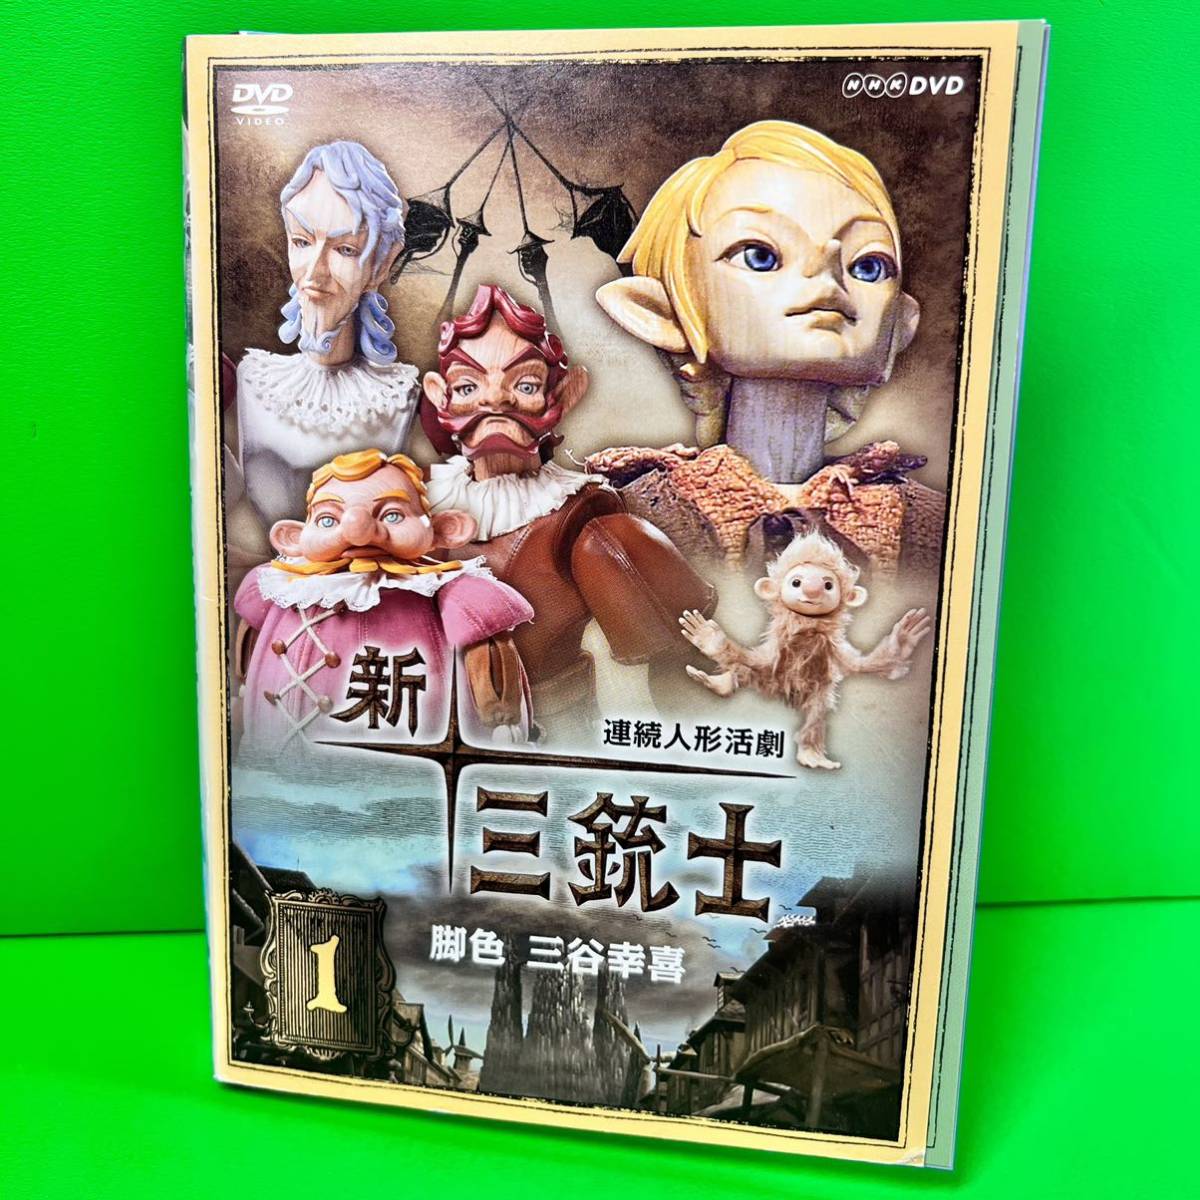 ヤフオク! - 連続人形活劇 新・三銃士 DVD 全8巻 全巻セット 送料